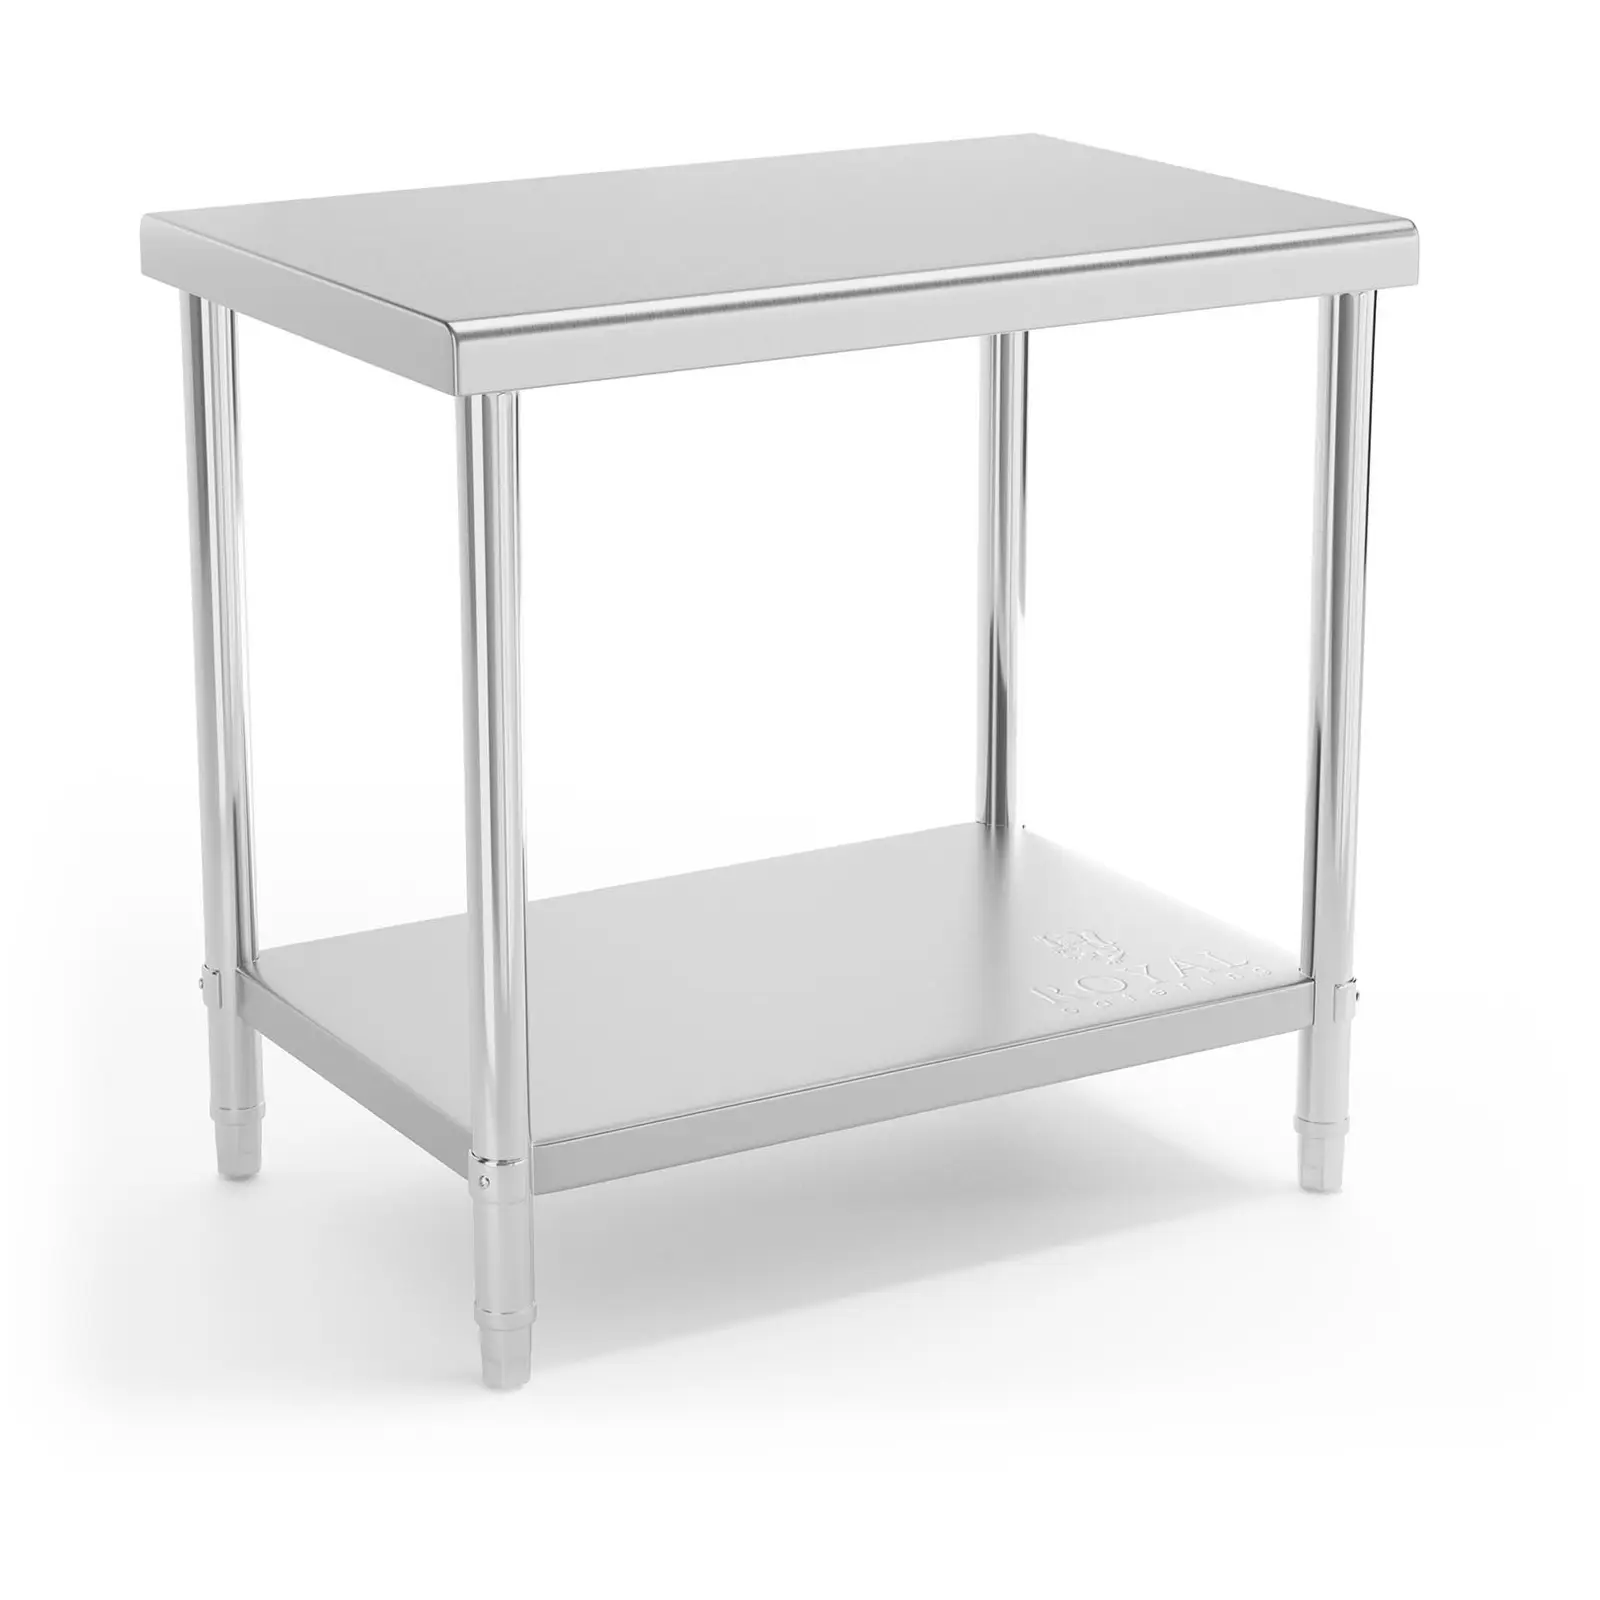 Radni stol od nehrđajućeg čelika - 90 x 60 cm - nosivost 210 kg